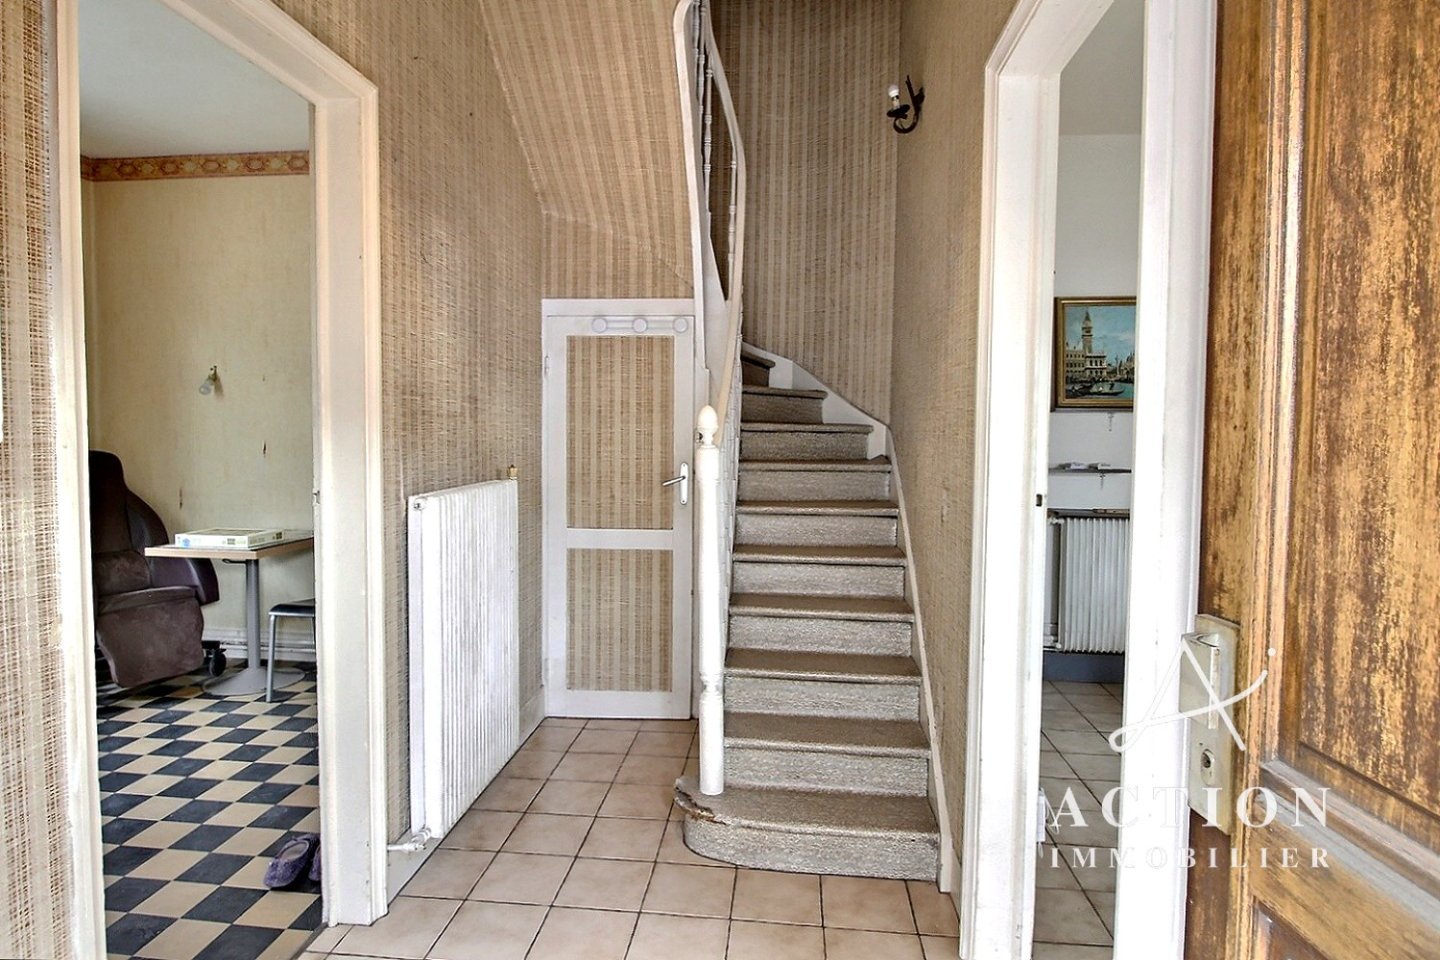 Maison 3 Chambres; jardin, garage A VENDRE - LOOS - 96 m2 - 179 810 €